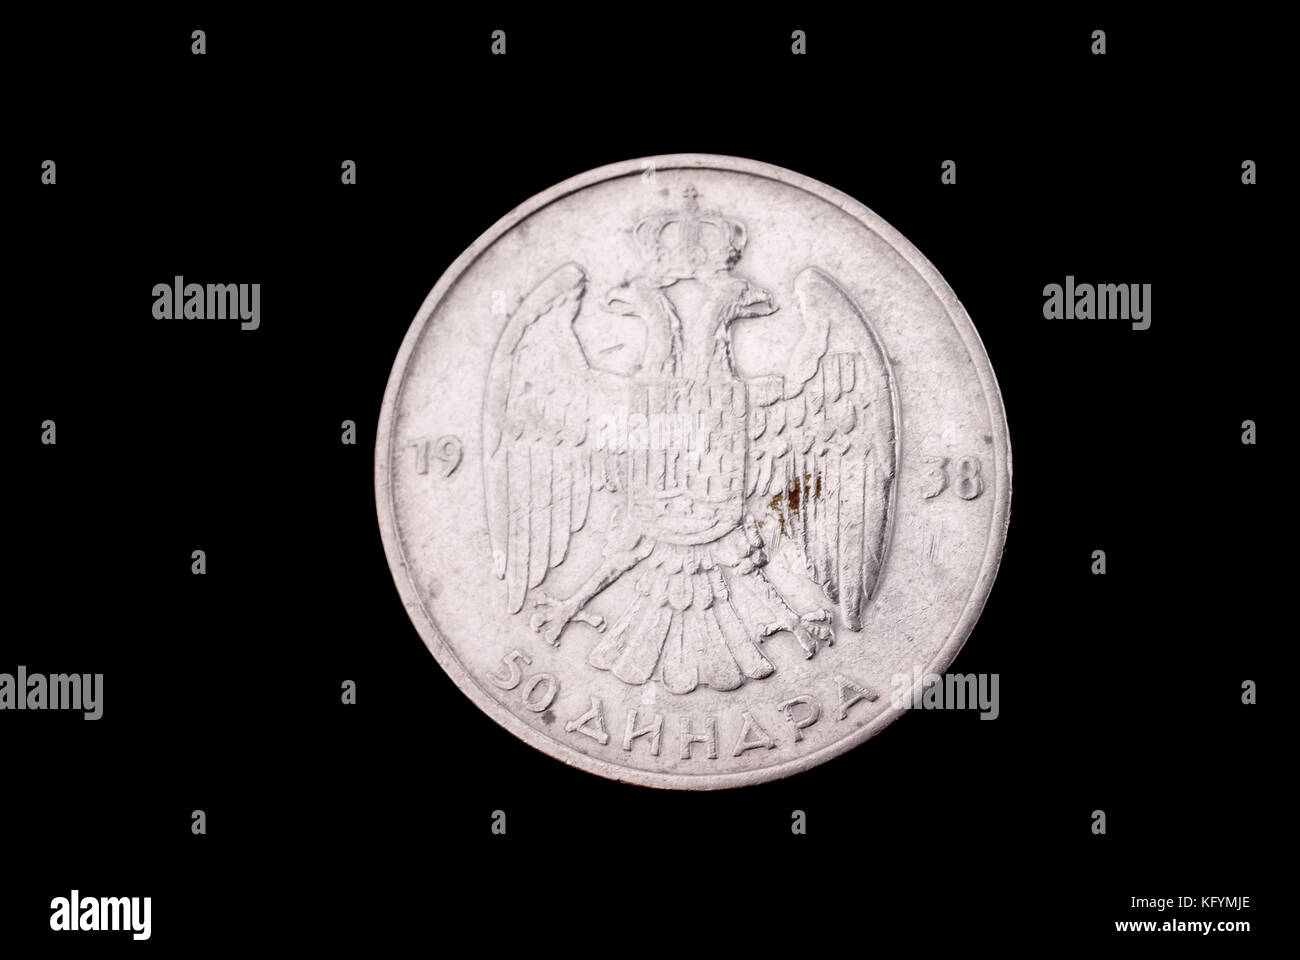 Regno Iugoslavia antica moneta d'argento (re petr ii, 50 dinar, 1938). retromarcia (di moneta). Foto Stock